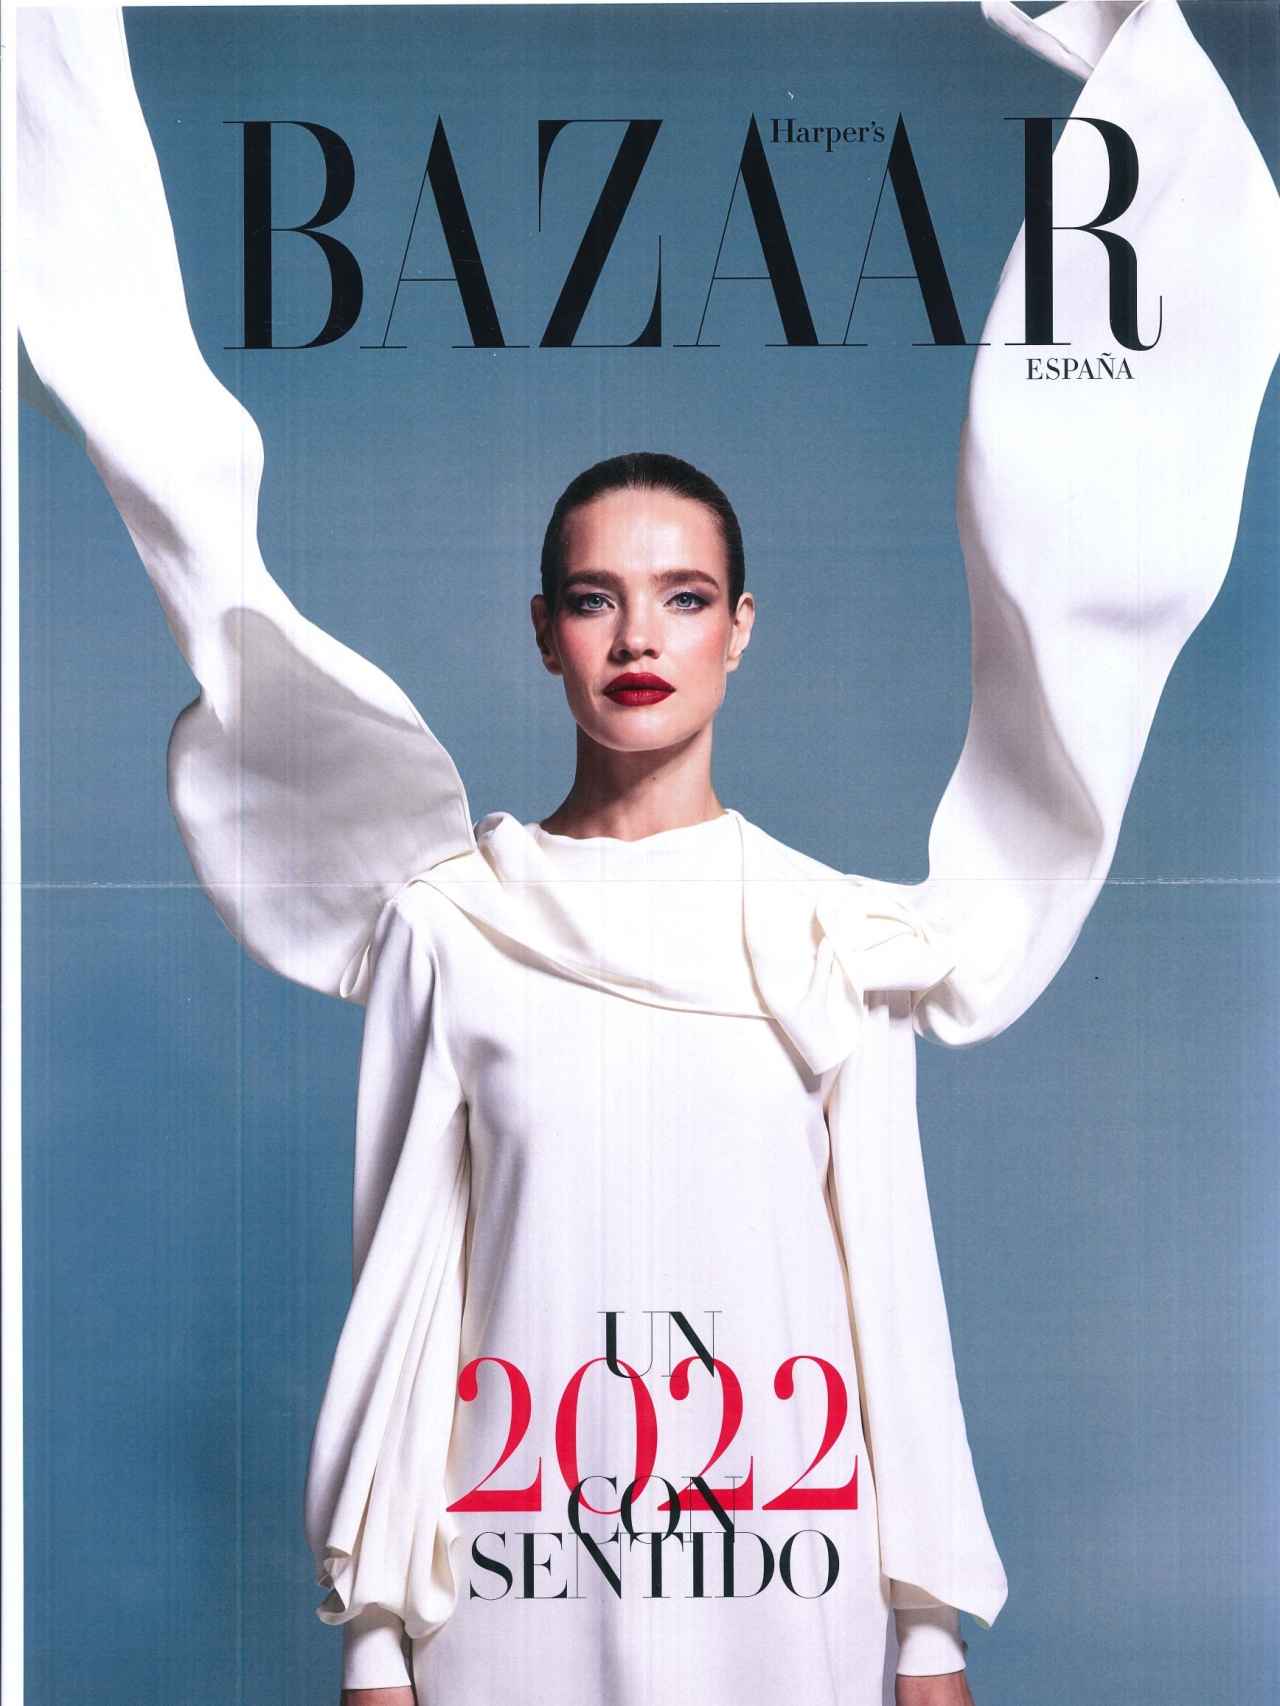 Portada del calendario de Harper's Bazaar.